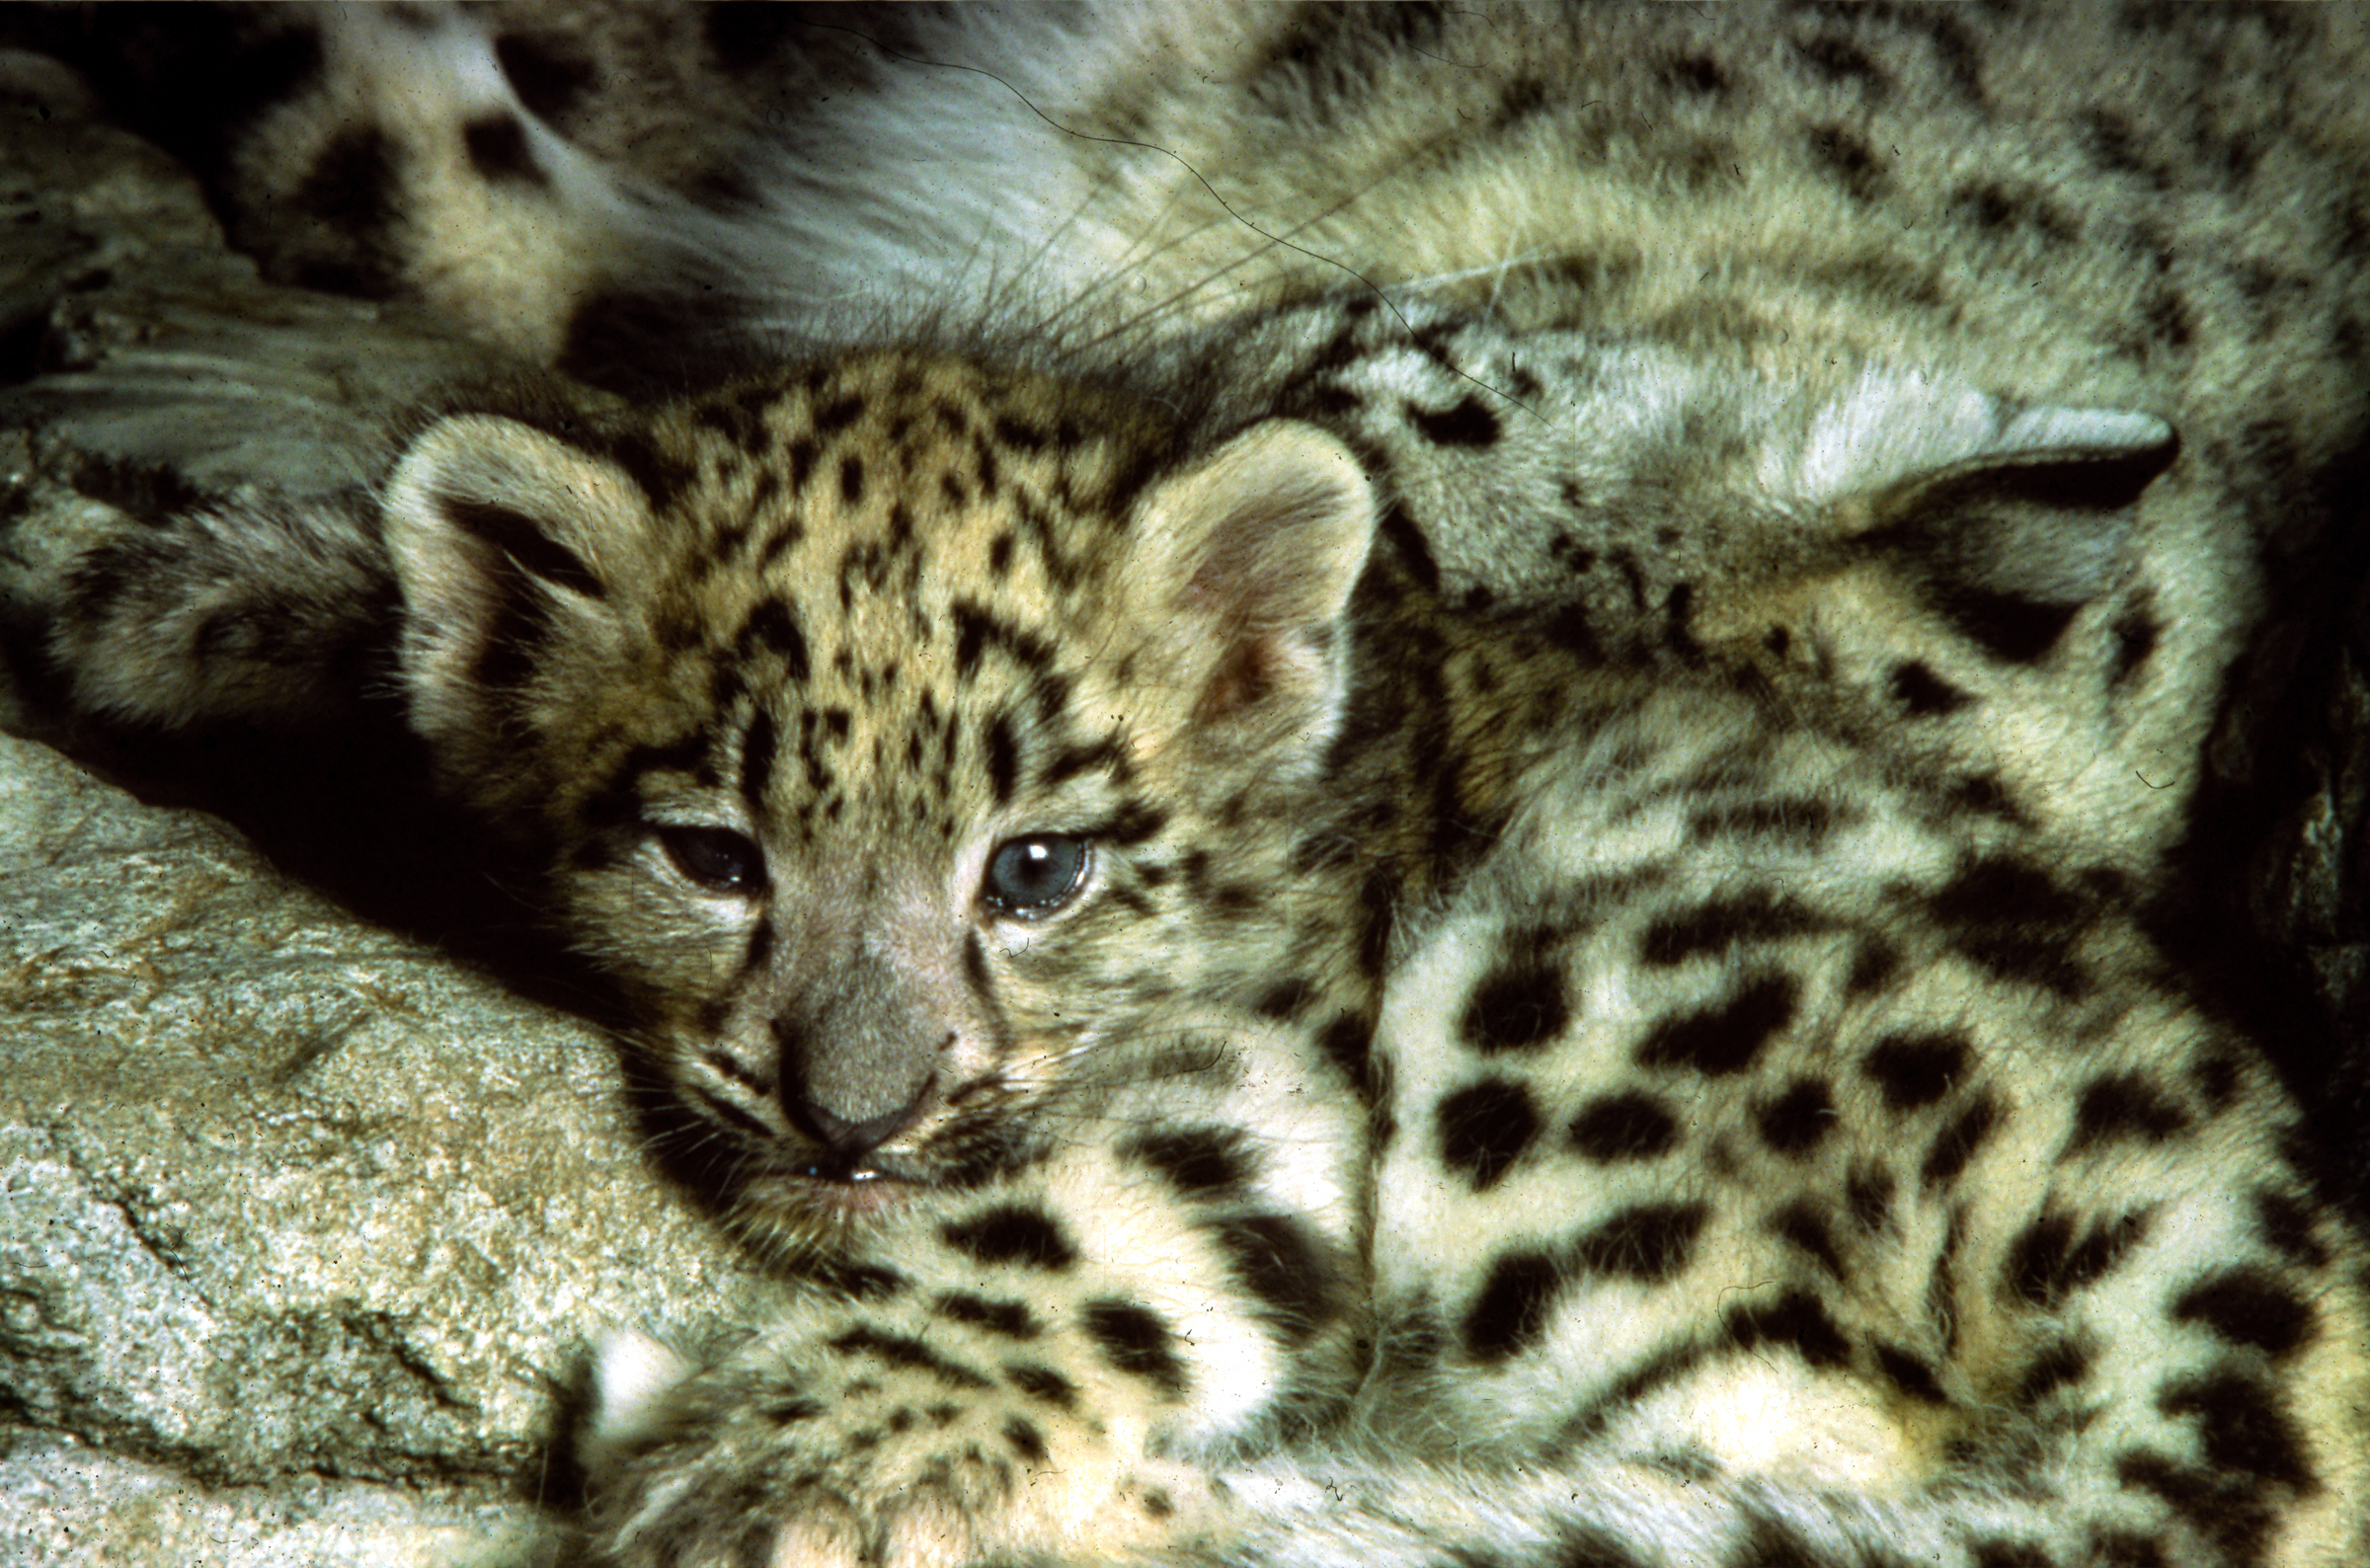 snow leopards, cubs - desktop wallpaper